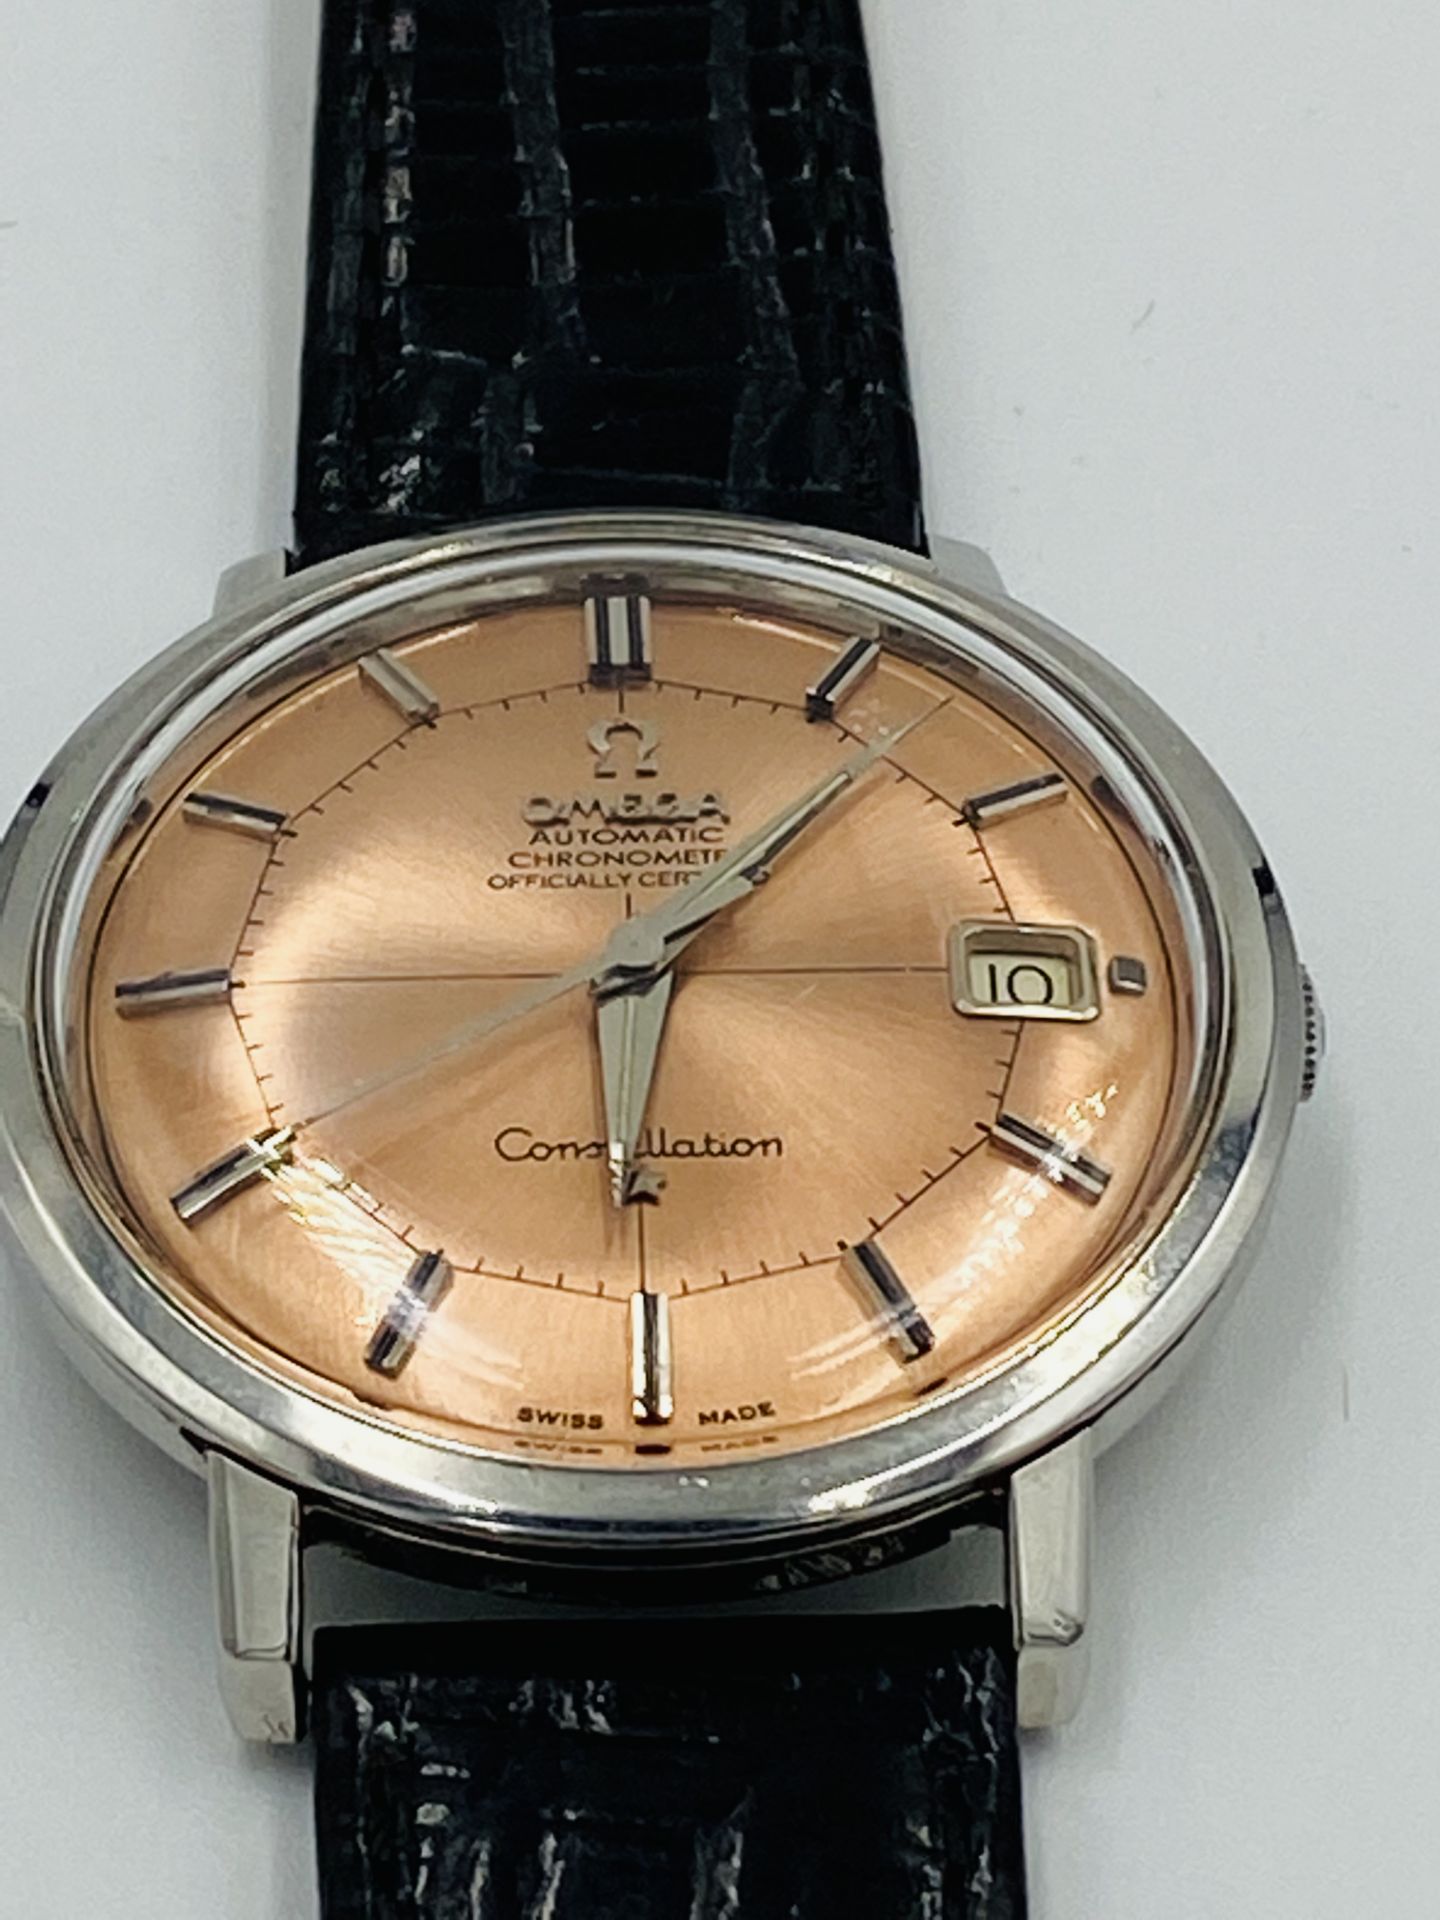 Omega Automatic Chronometer Constellation wrist watch